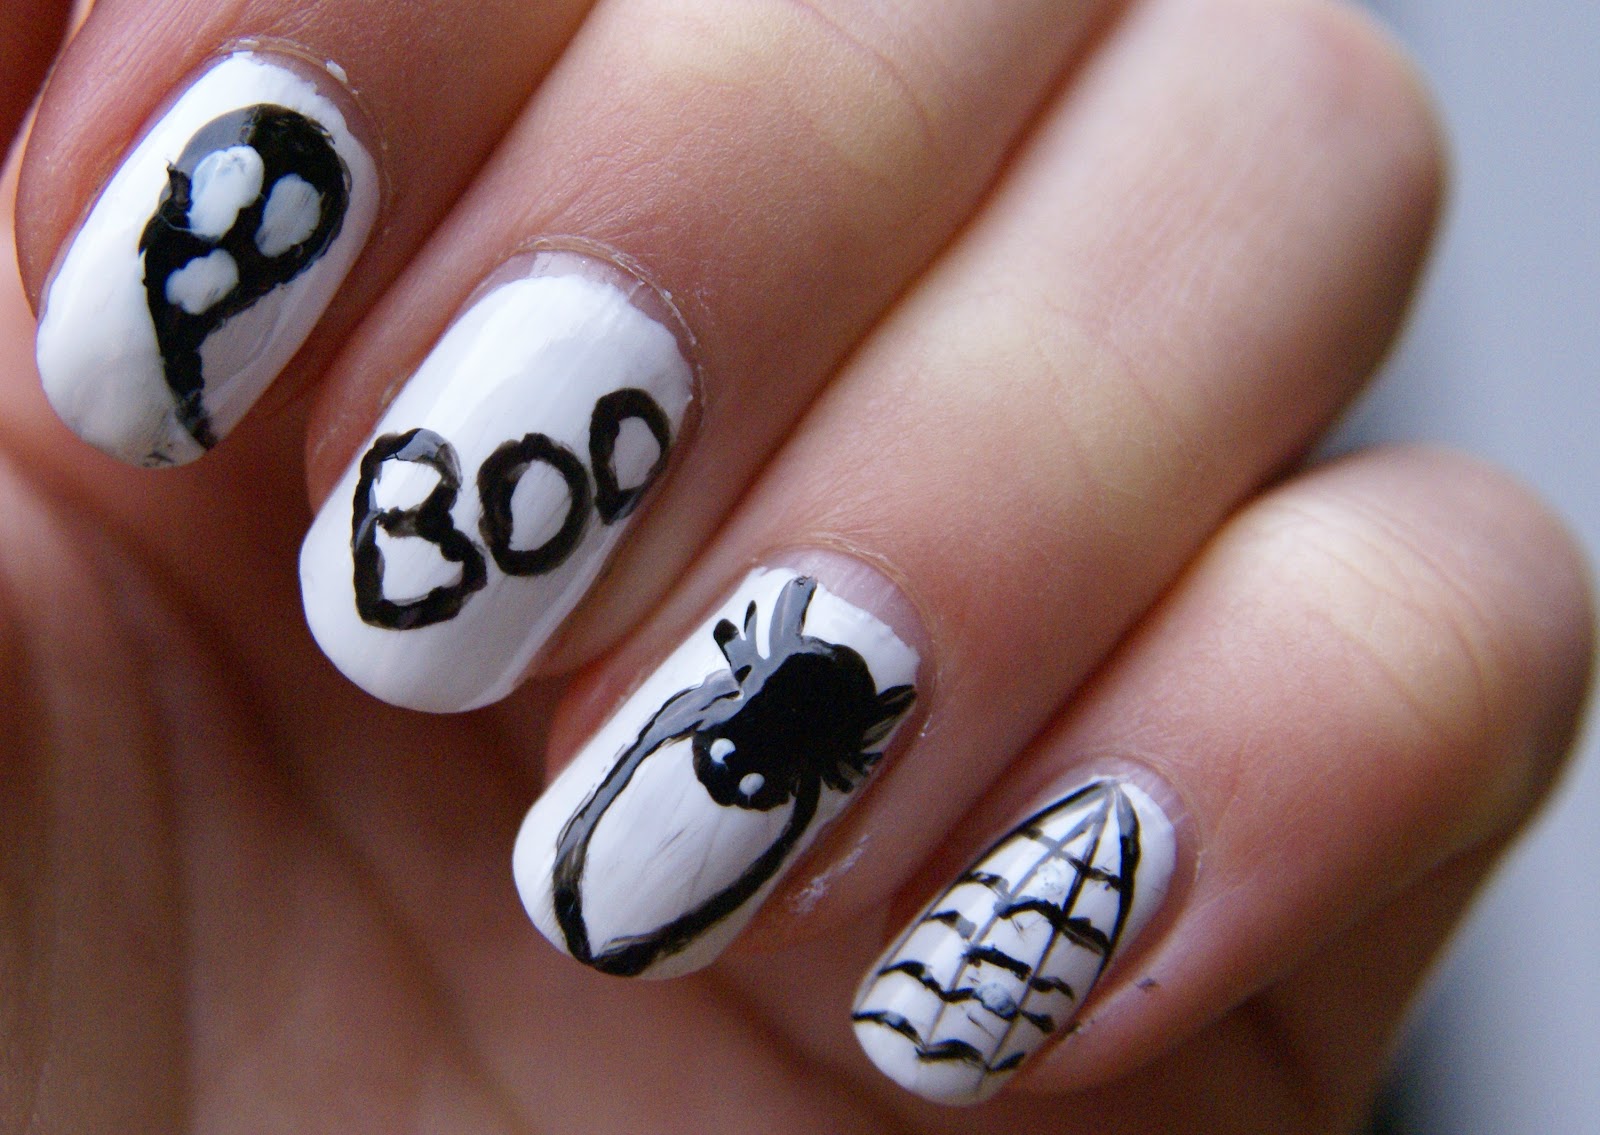 1. "Halloween-inspired nail art ideas" - wide 7